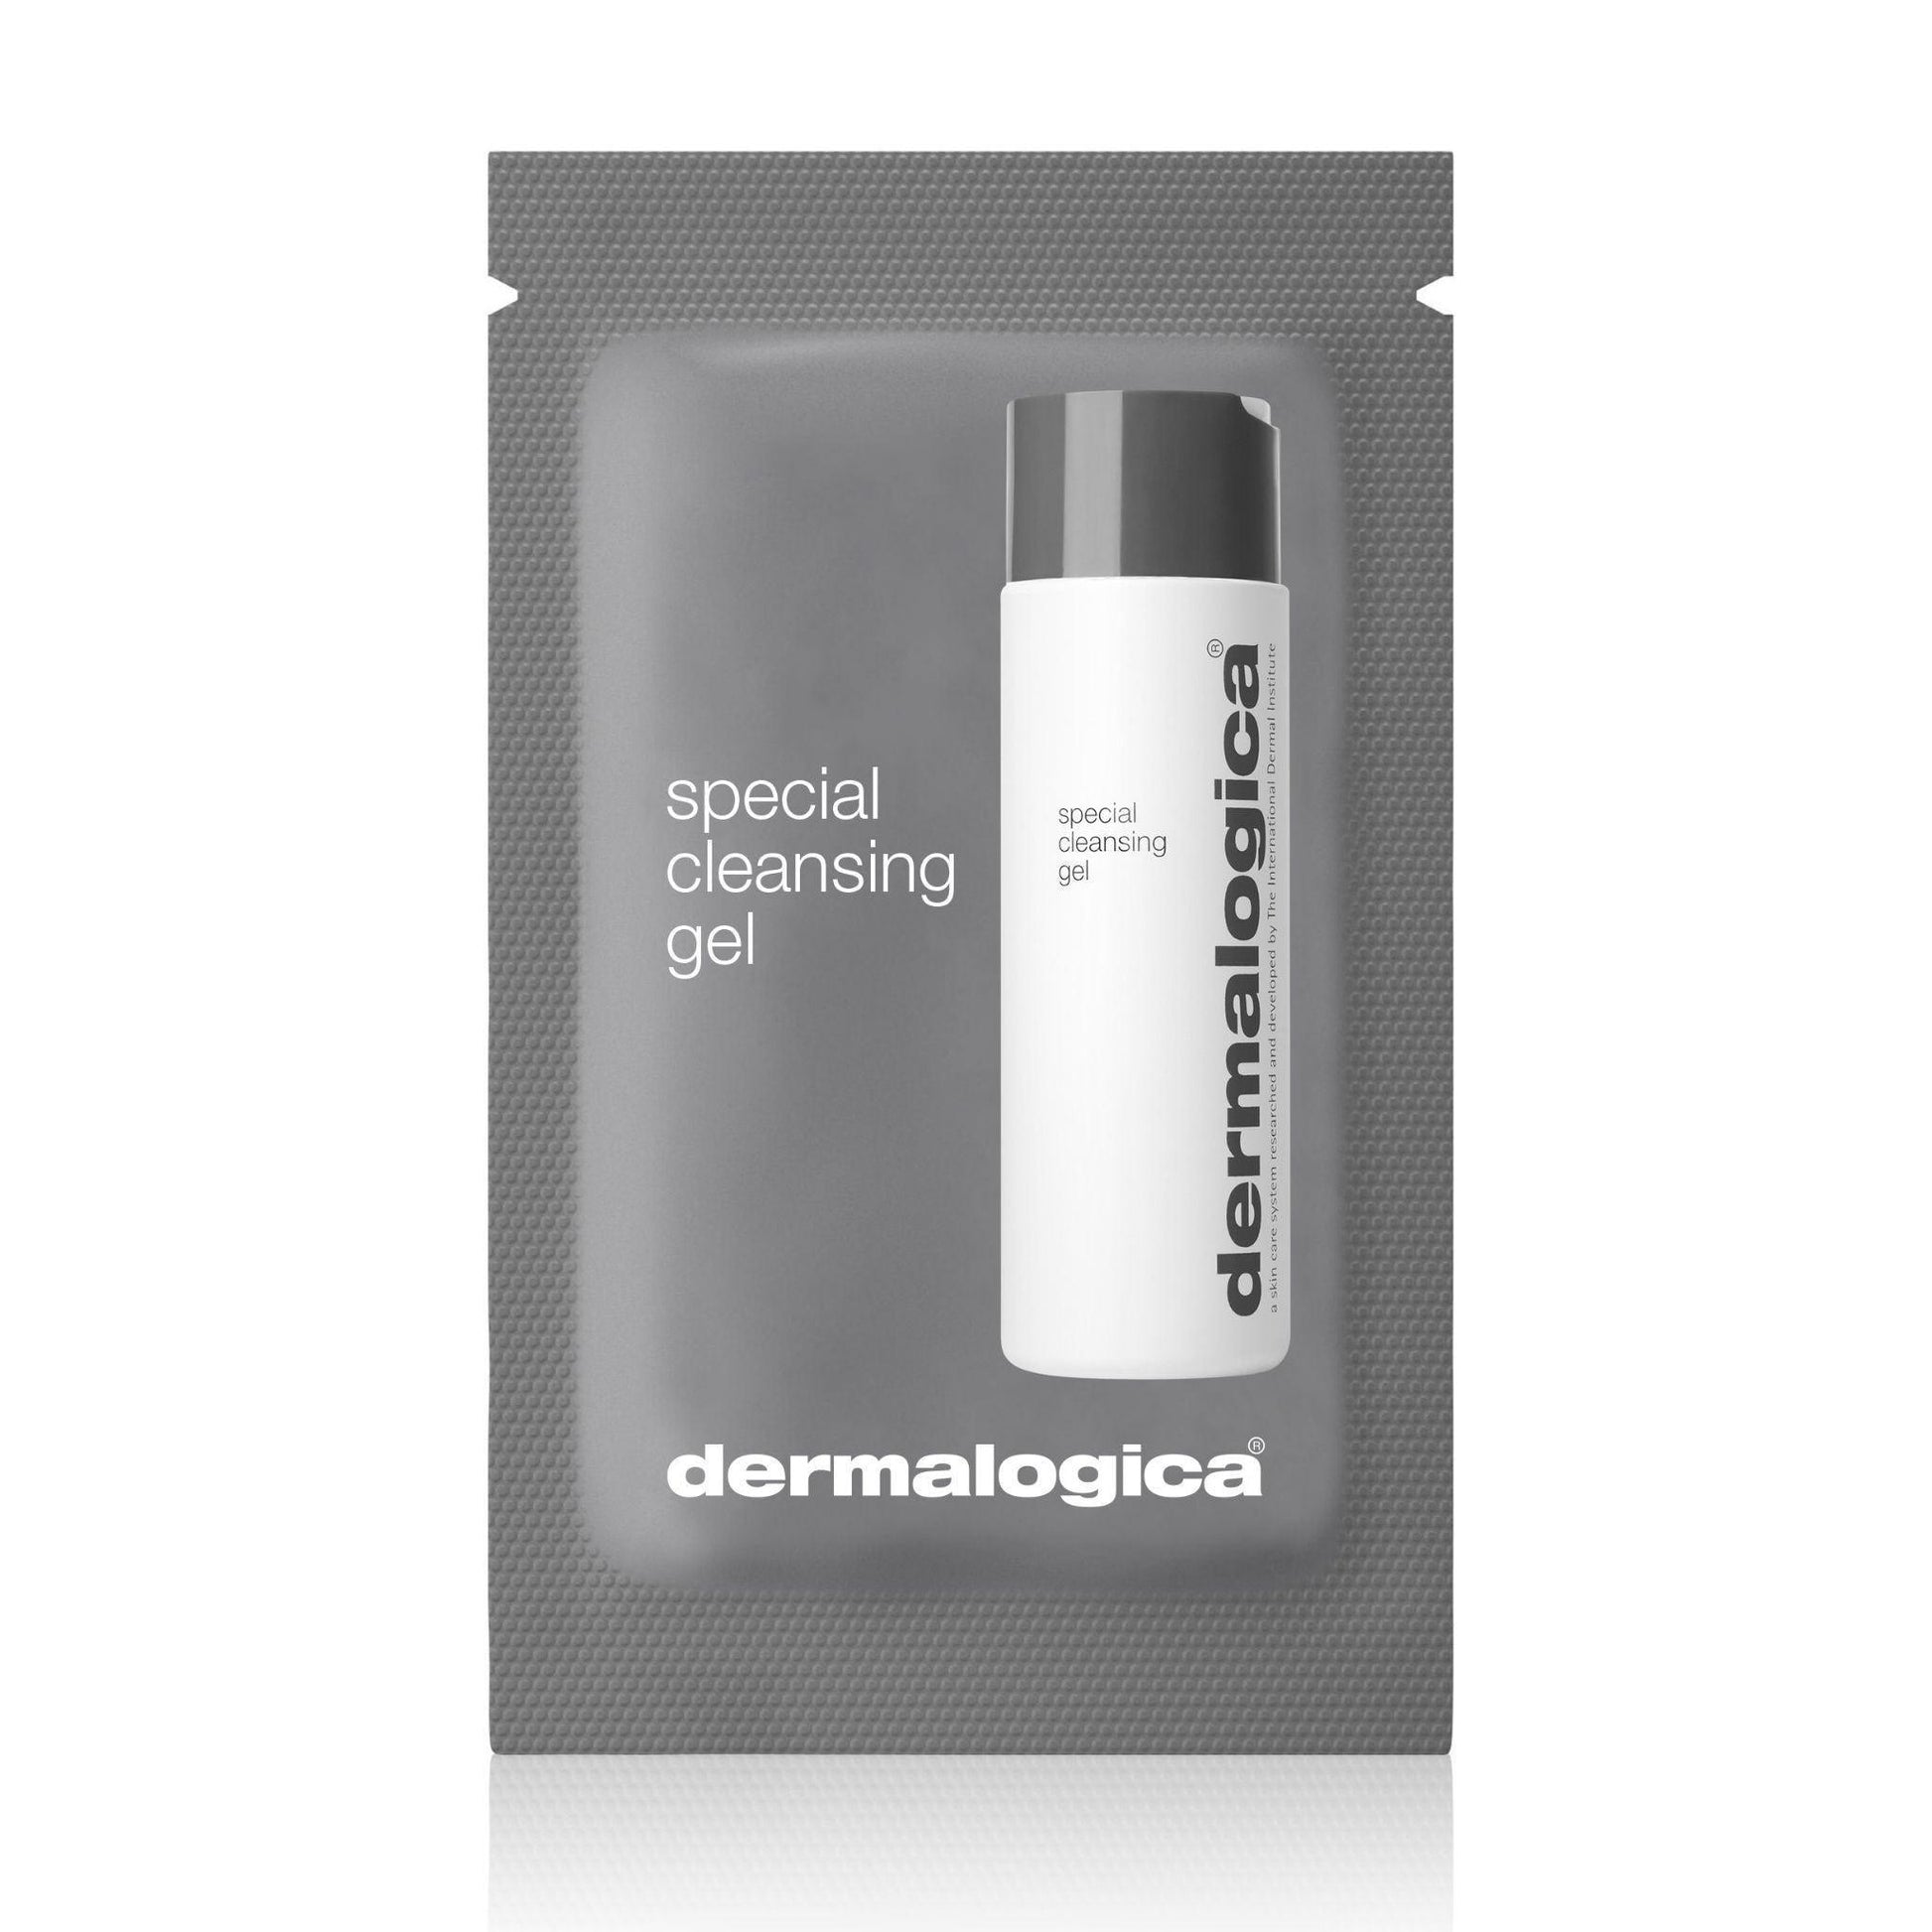 special cleansing gel (sample) - Dermalogica Thailand